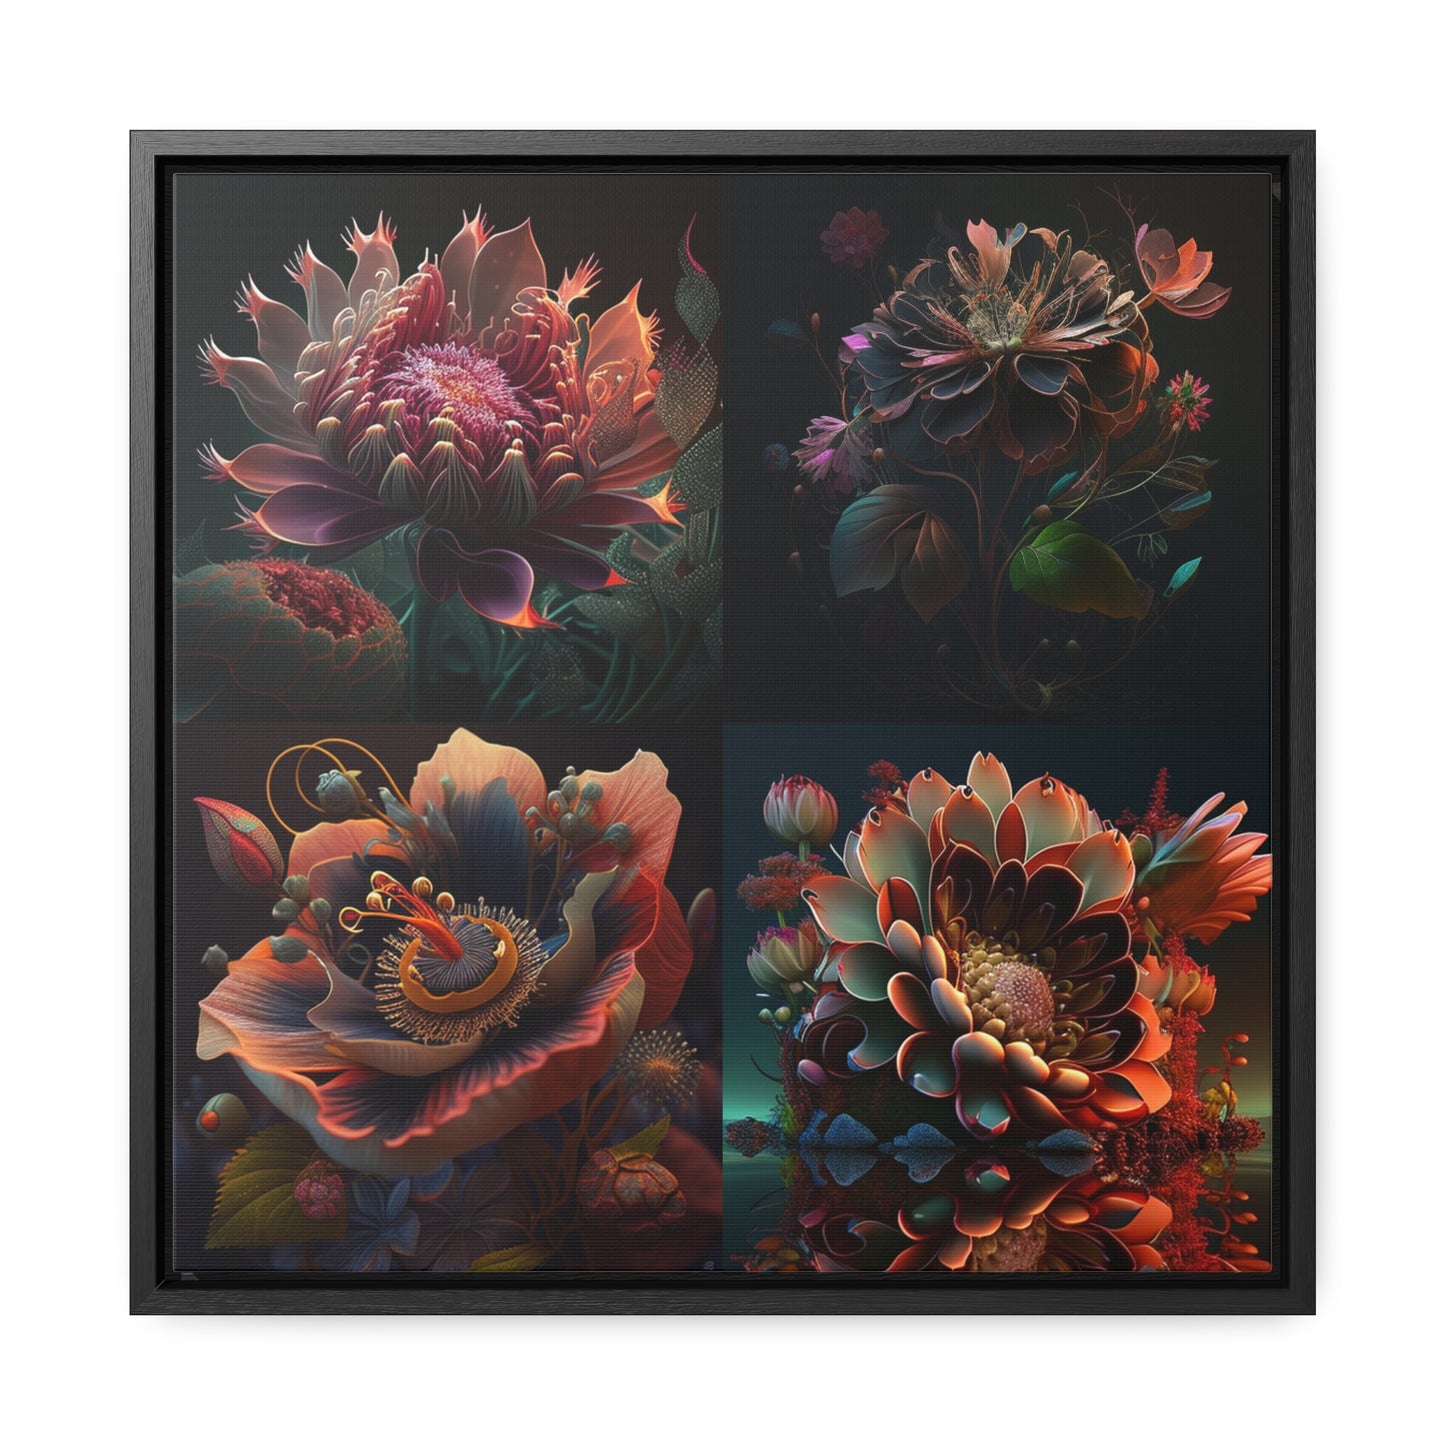 Gallery Canvas Wraps, Square Frame Flower Arangment 5